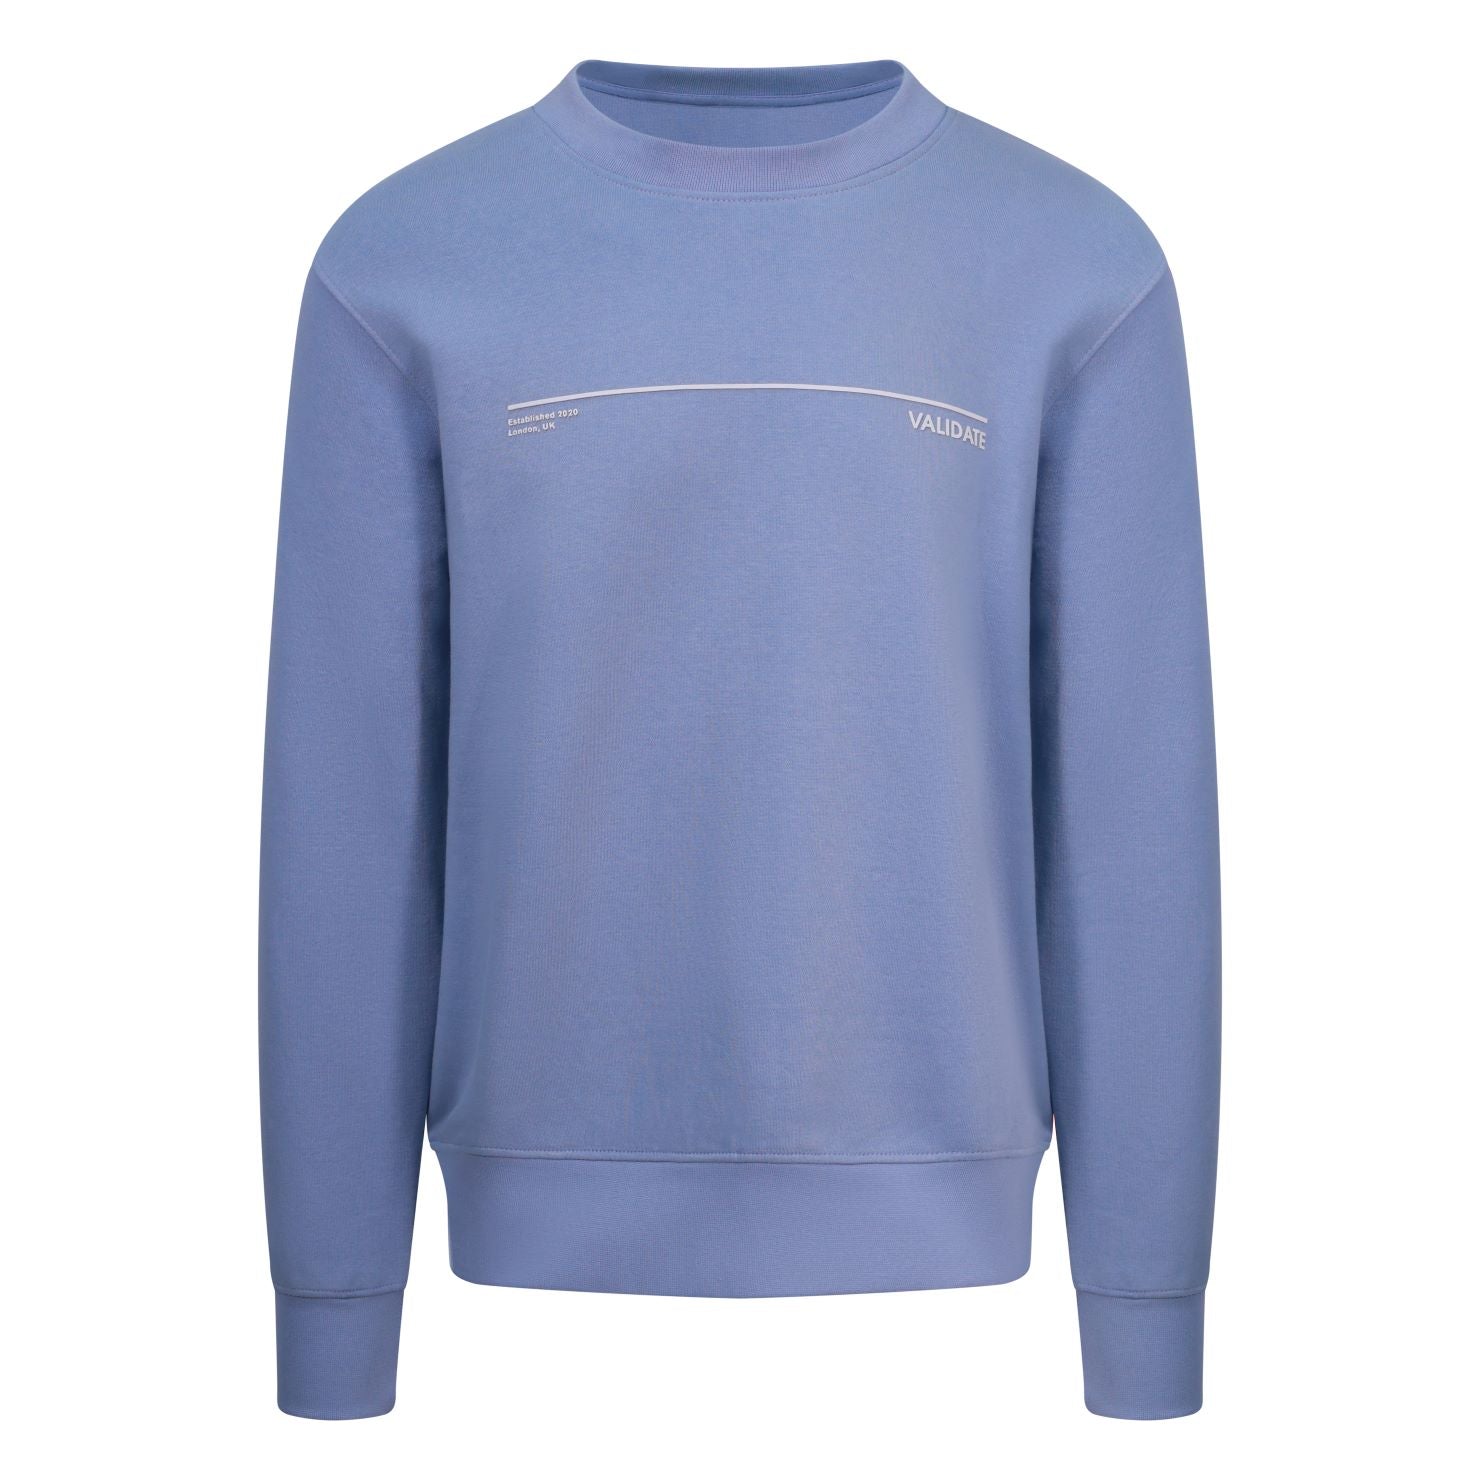 Validate Men's Lino Sweatshirt Blue